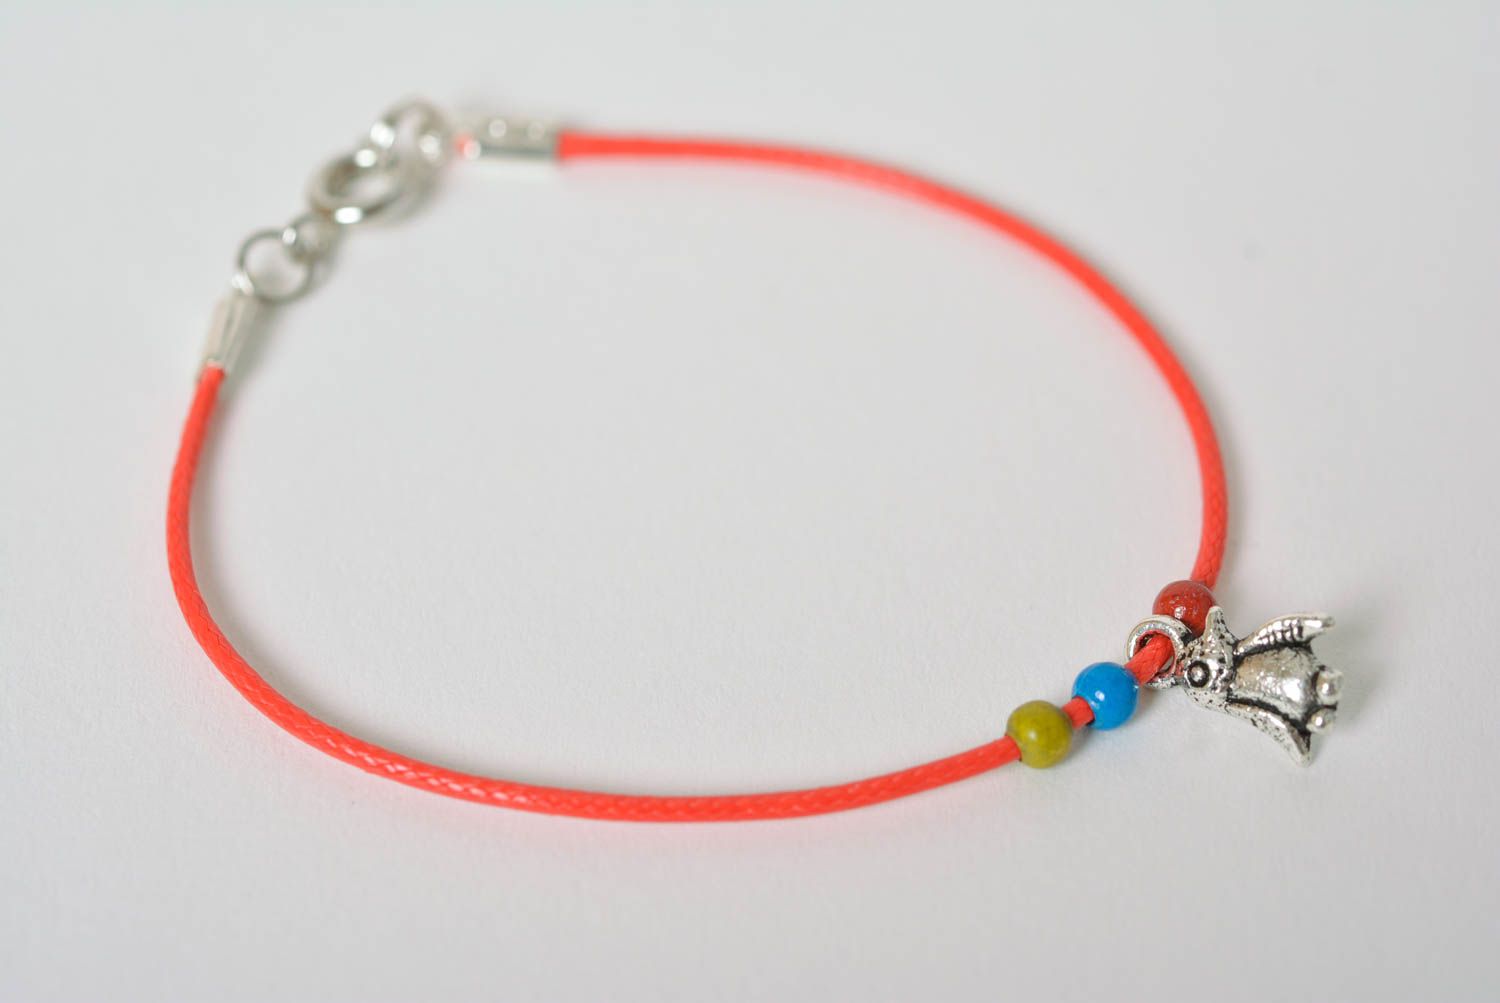 Friendship bracelet homemade jewelry cord bracelet charm bracelet gift ideas photo 5